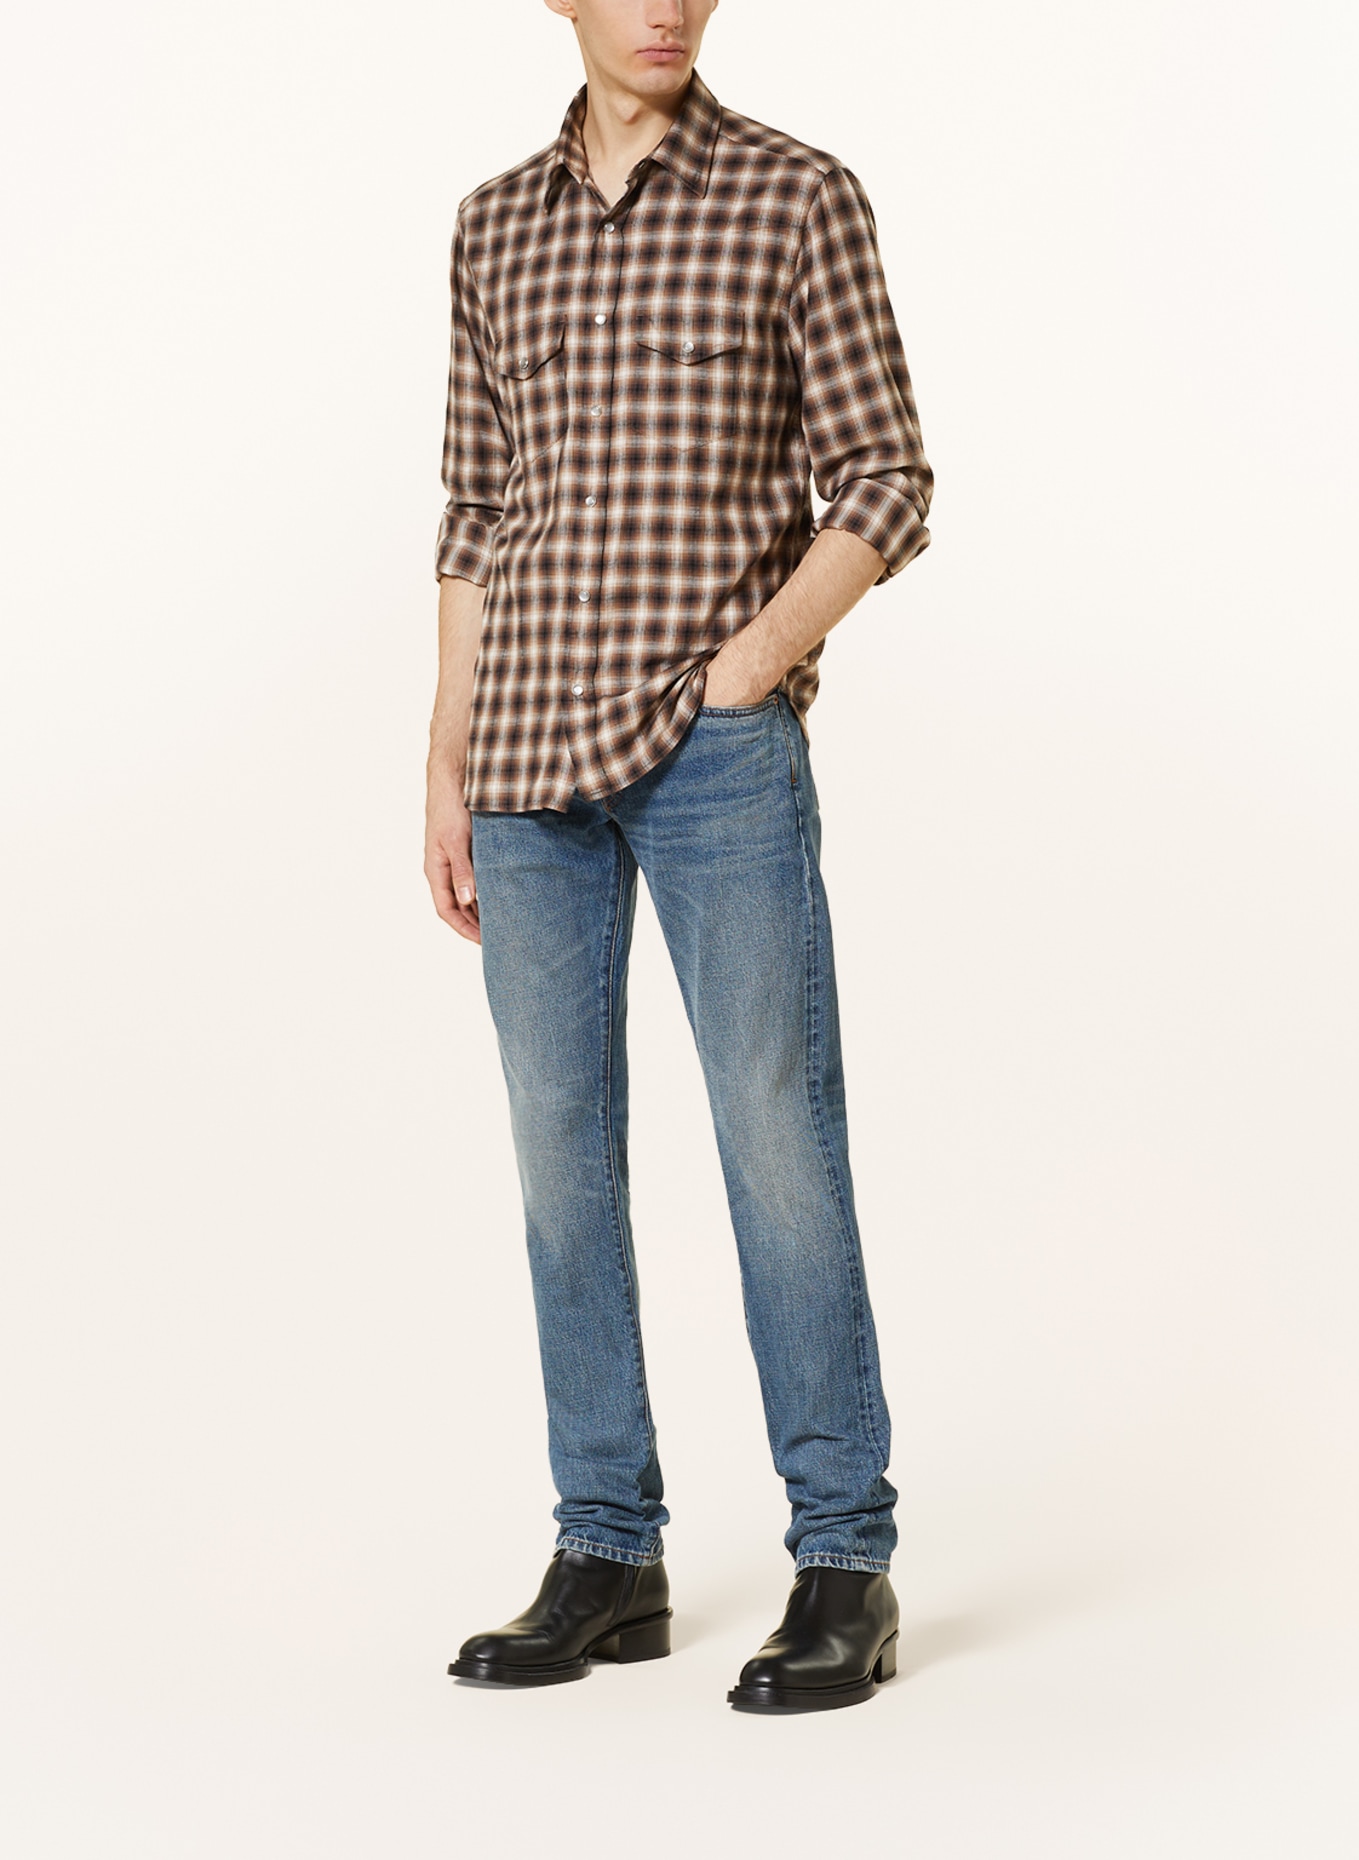 TOM FORD Flannel shirt regular fit, Color: BROWN/ LIGHT BROWN/ DARK GRAY (Image 2)